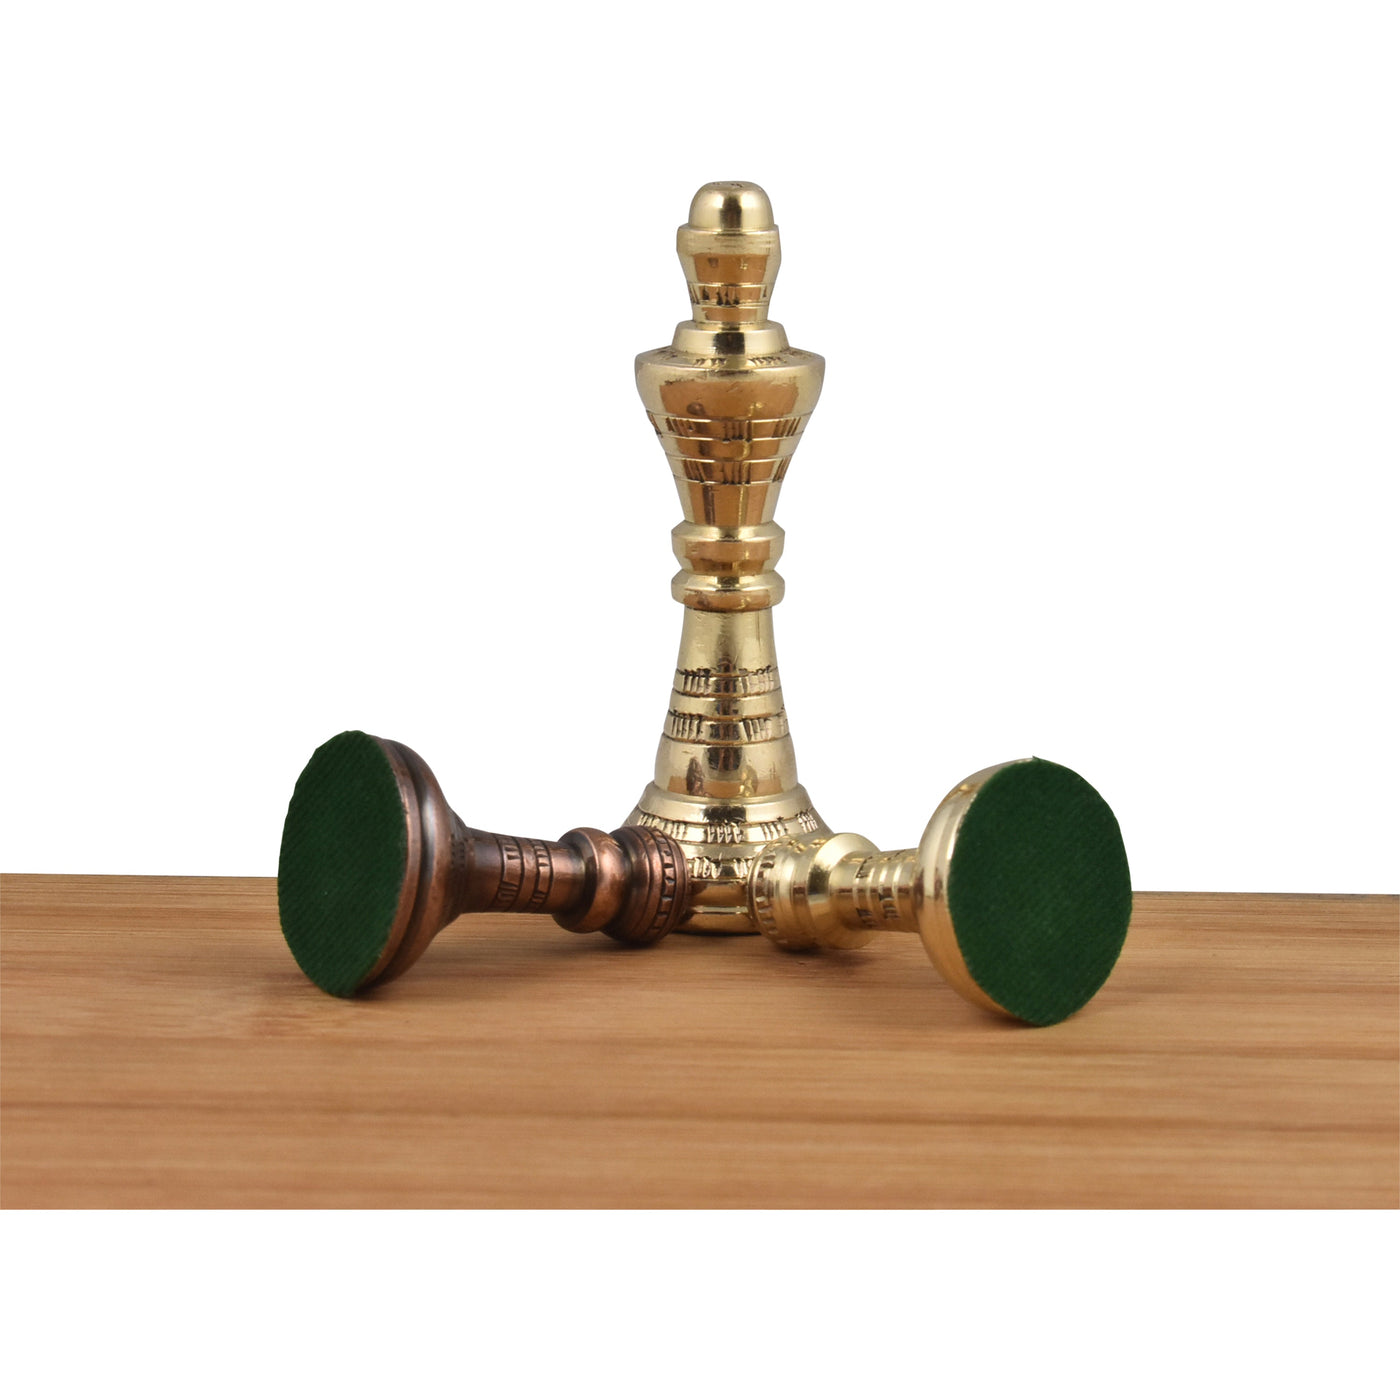 Staunton Inspired Brass Metal Luxury Chess Pieces & Board Set